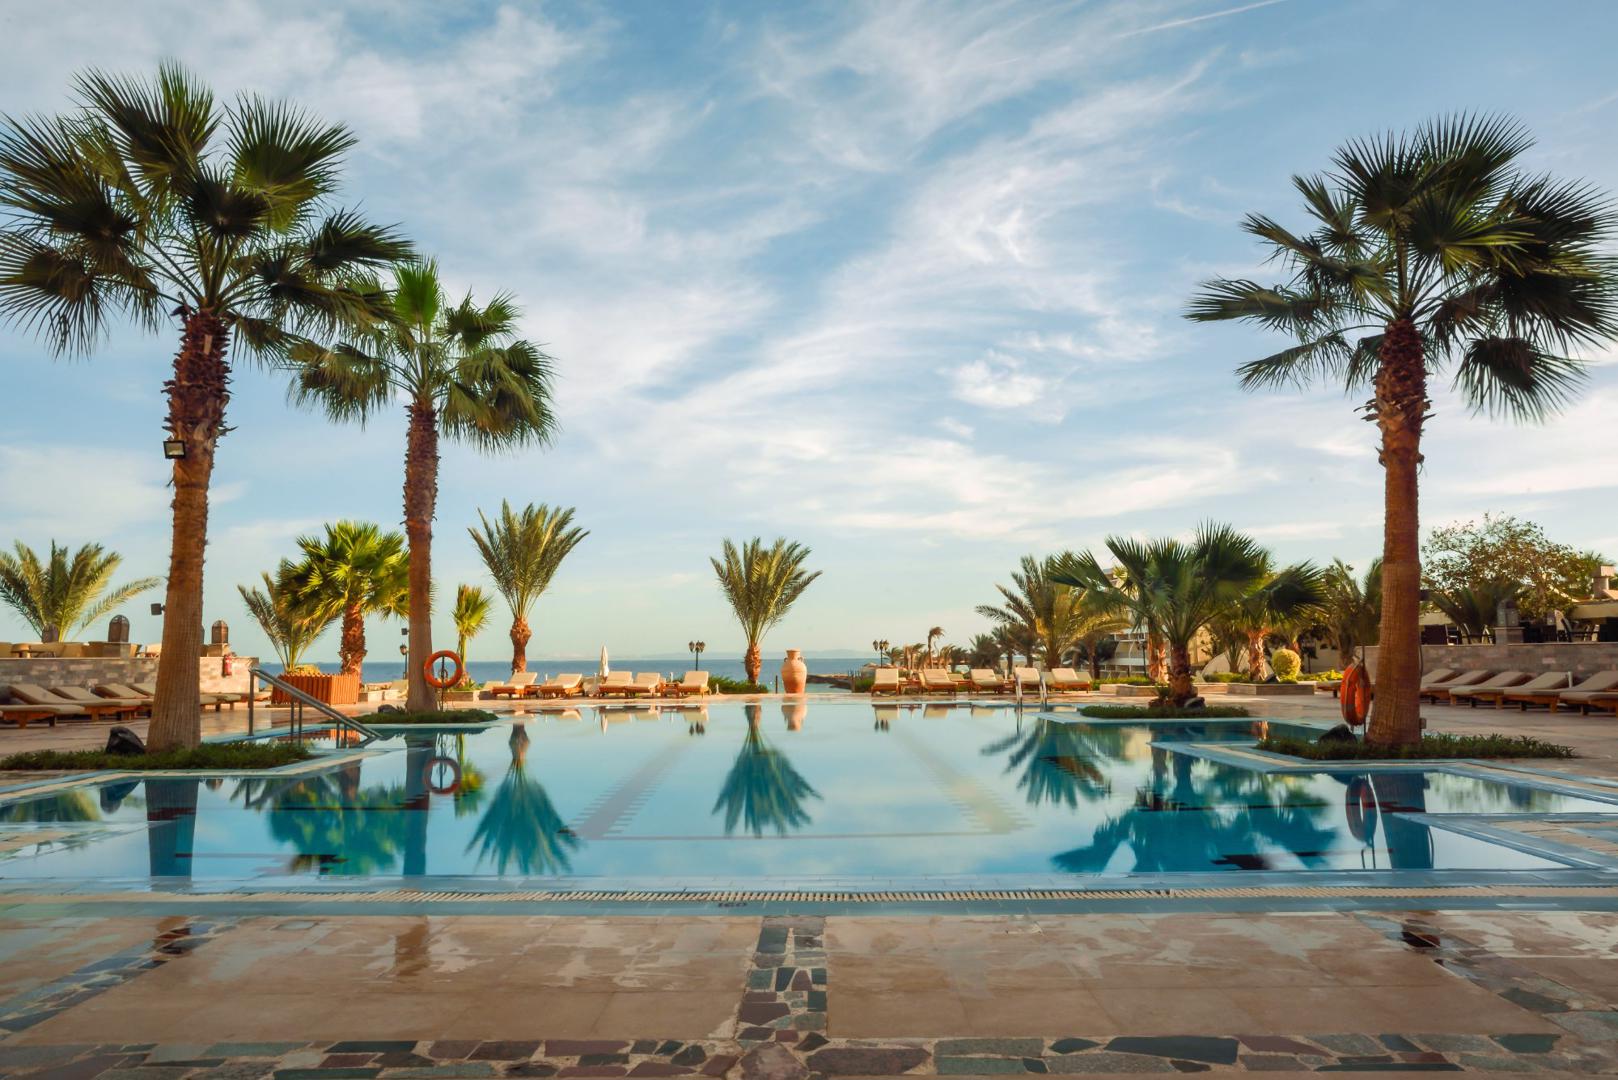 Royal Star Beach Resort - Hurghada - Egypte